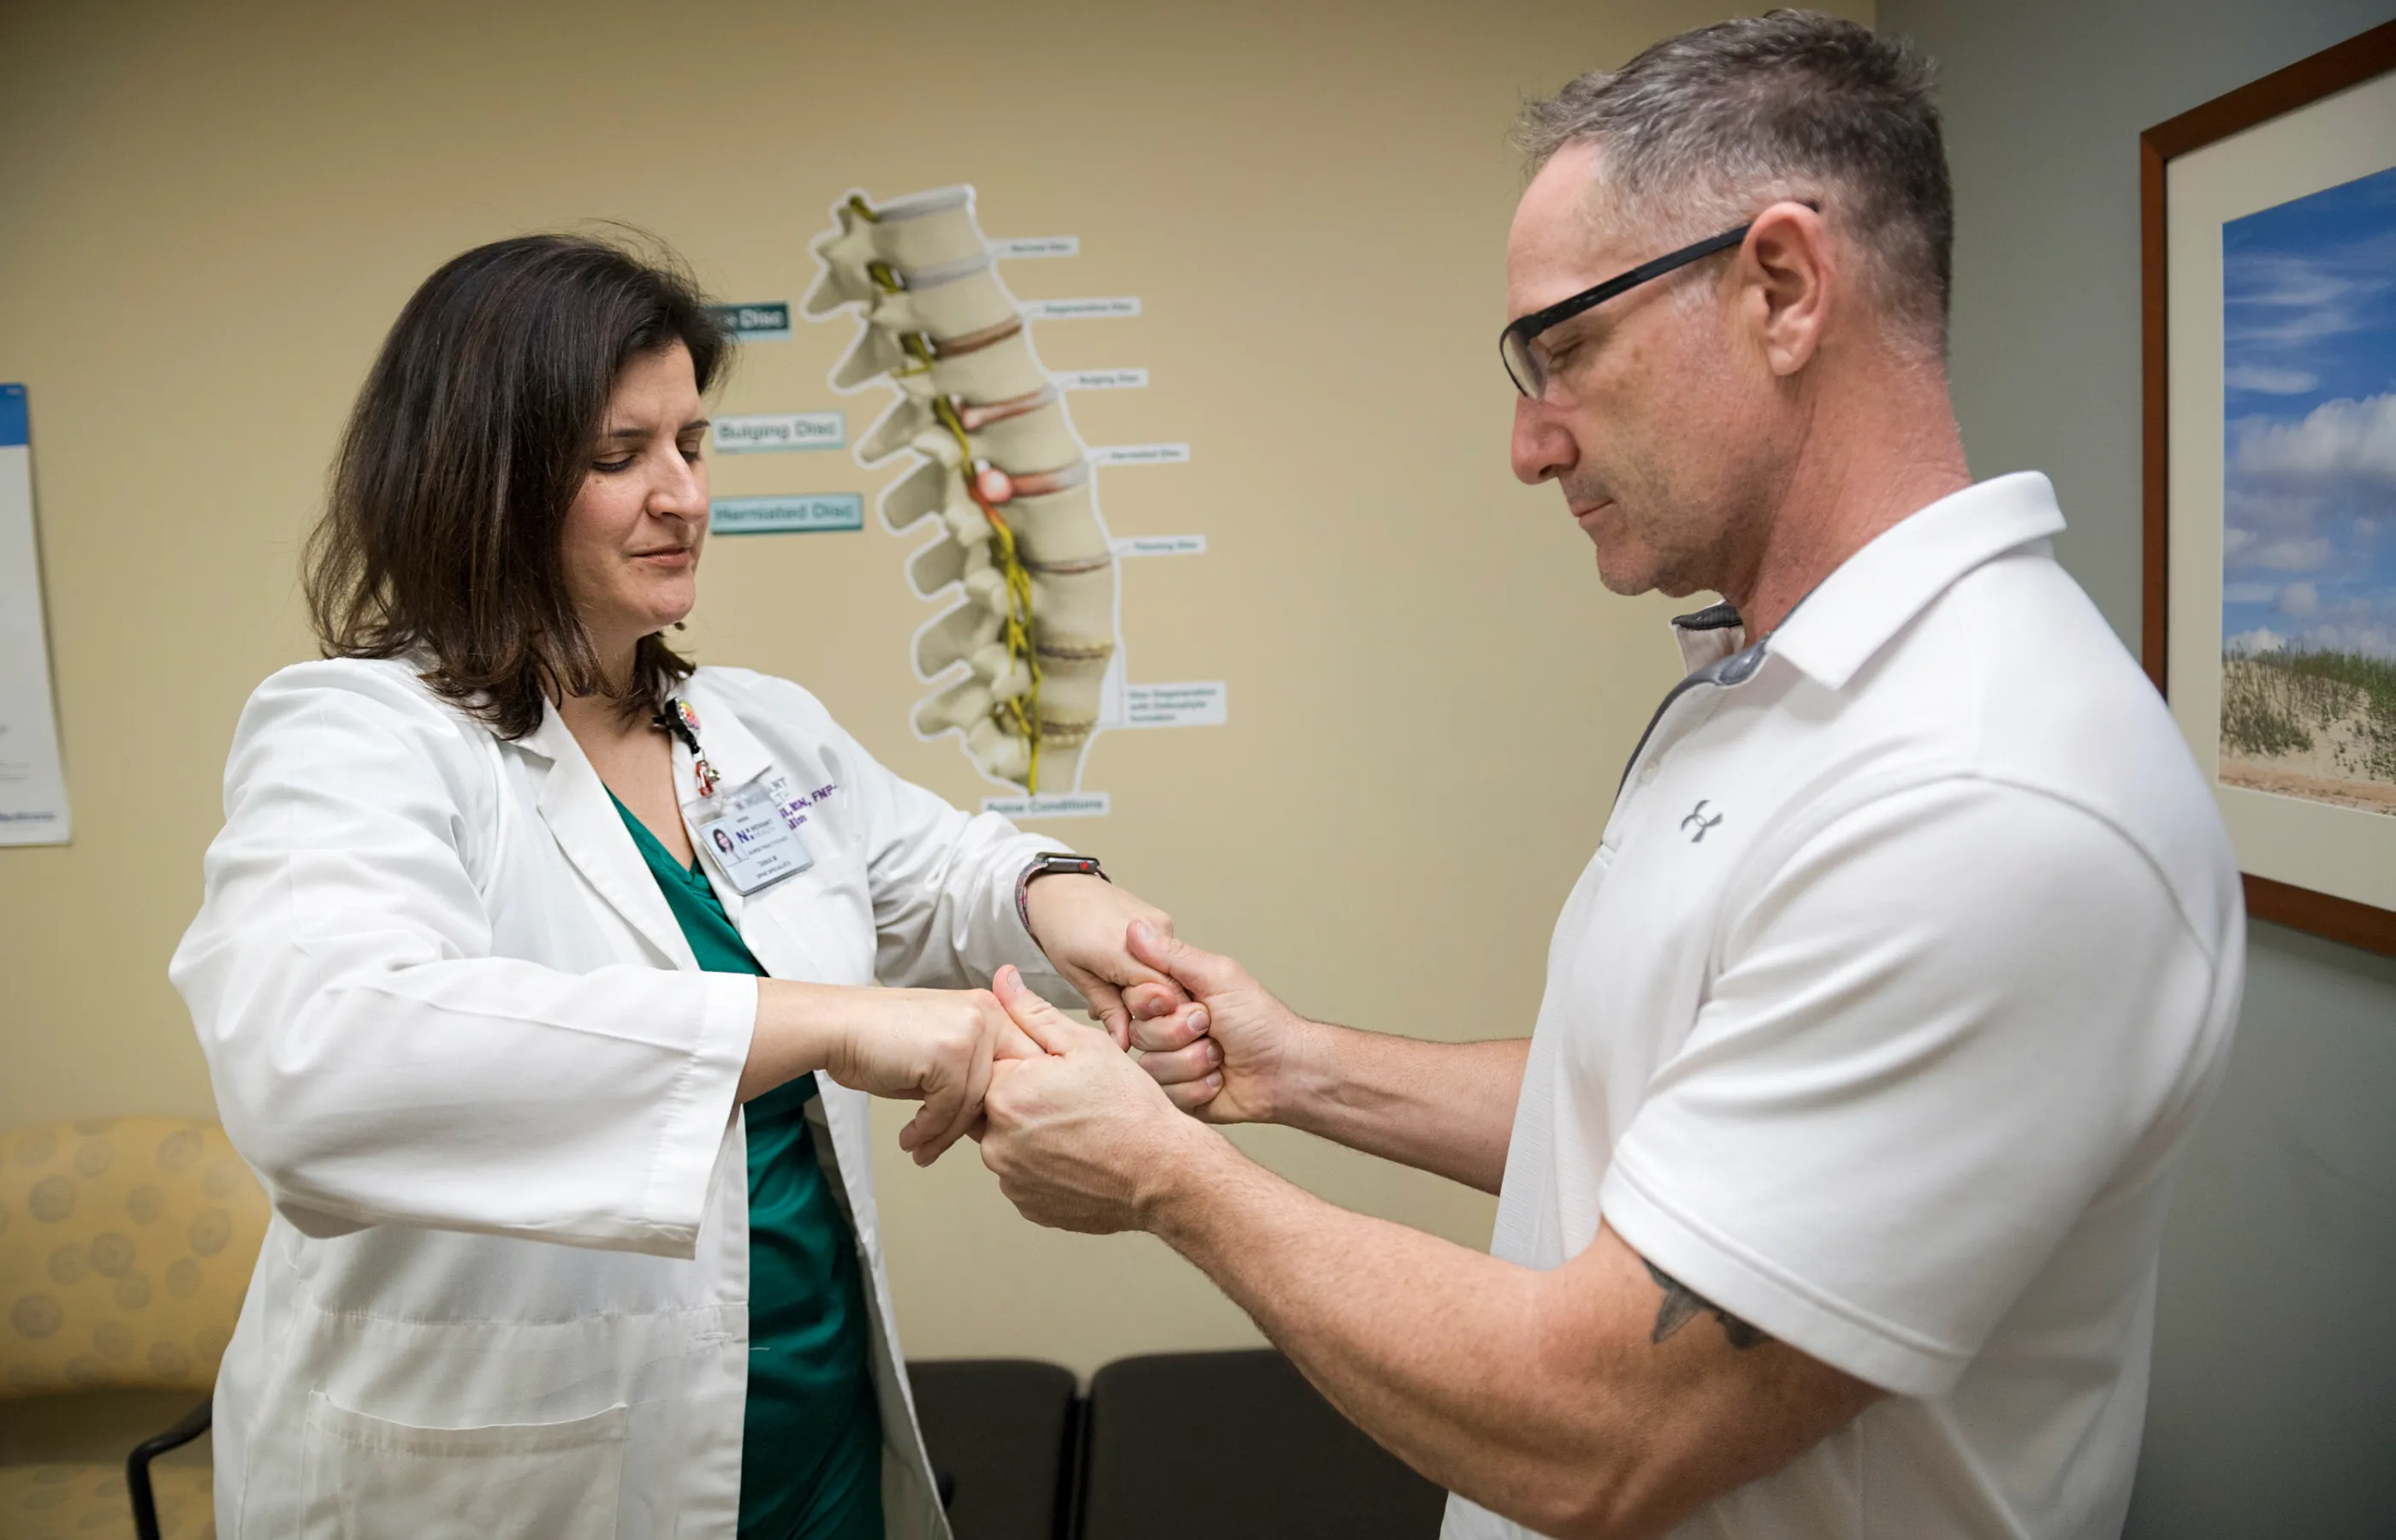 Dr. Mattioli is examining a patients hand grip. 